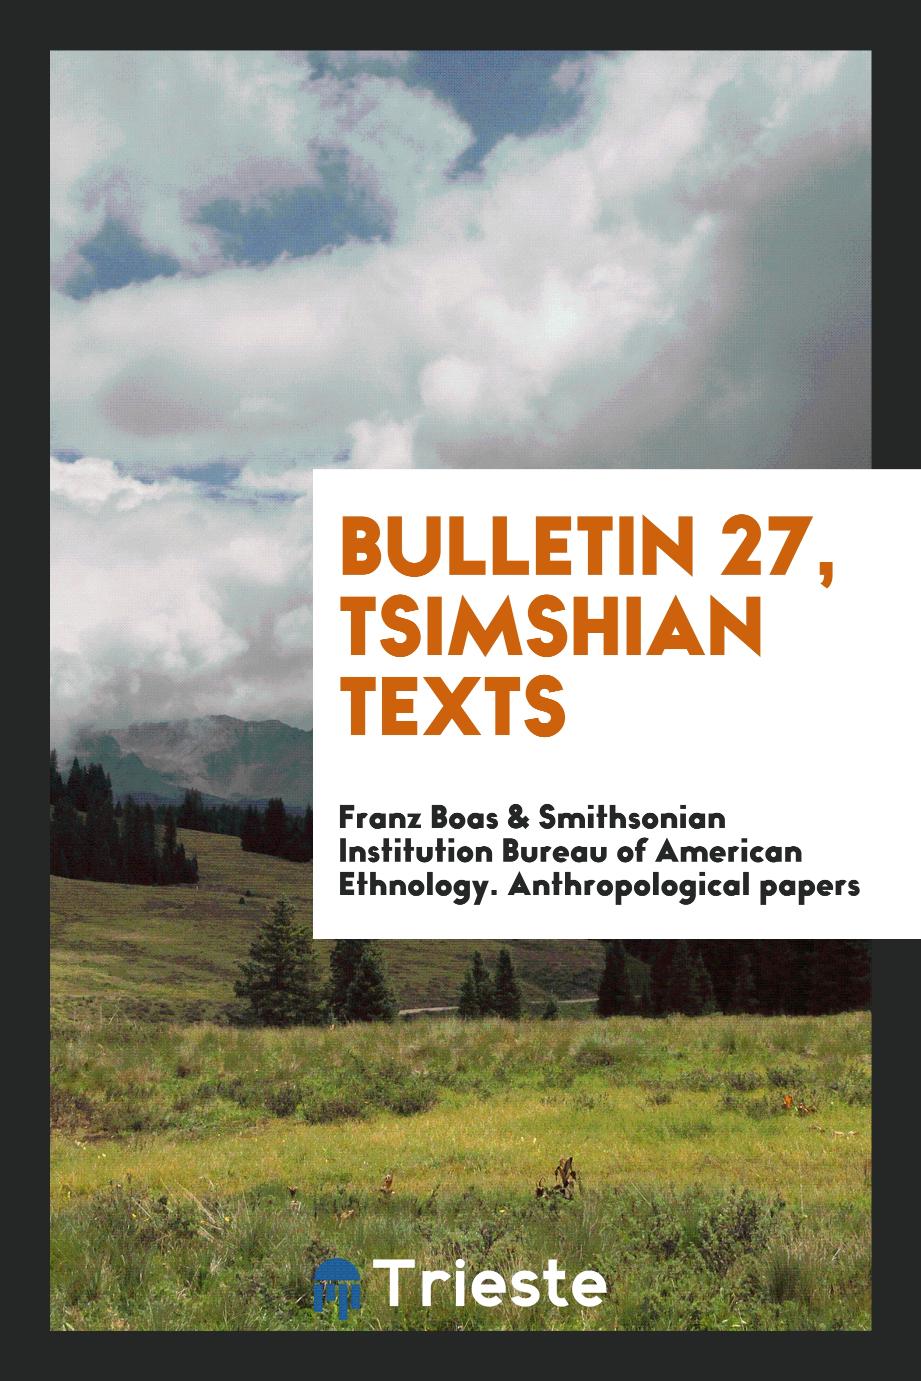 Bulletin 27, Tsimshian texts